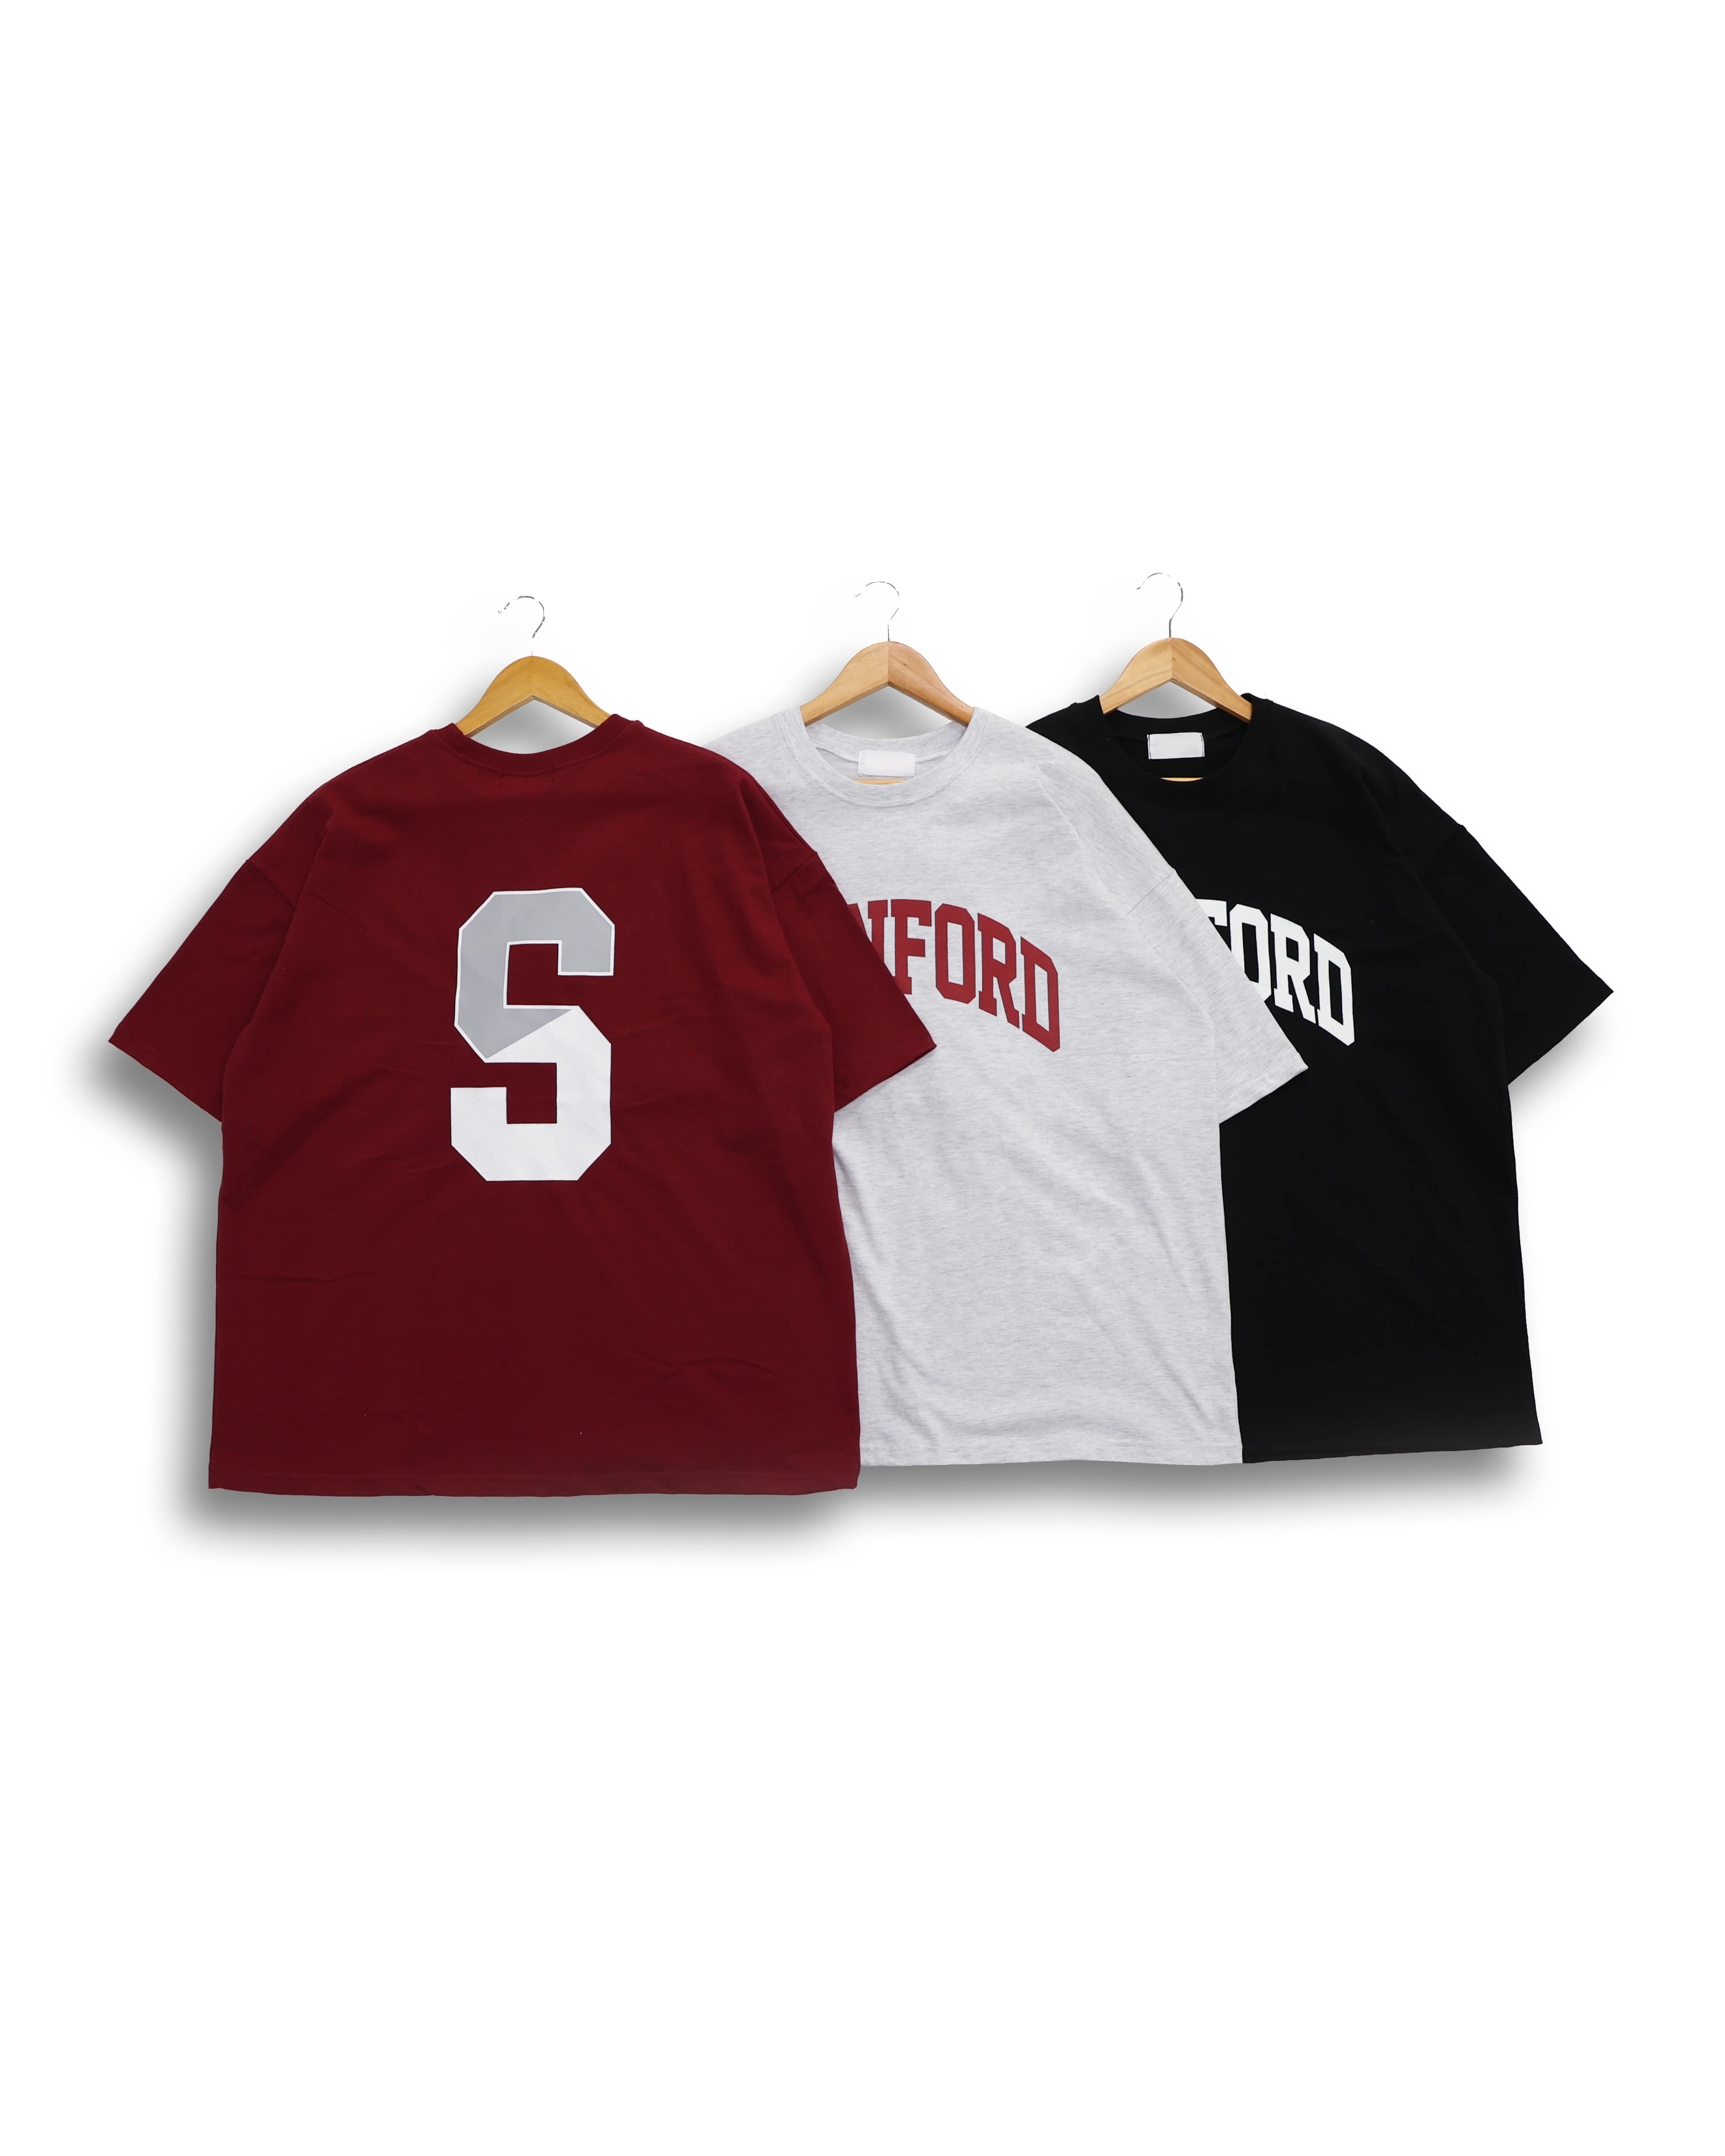 NOIR STANFORD Logo Wide T Shirts (Black/Wnie/Light Gray)